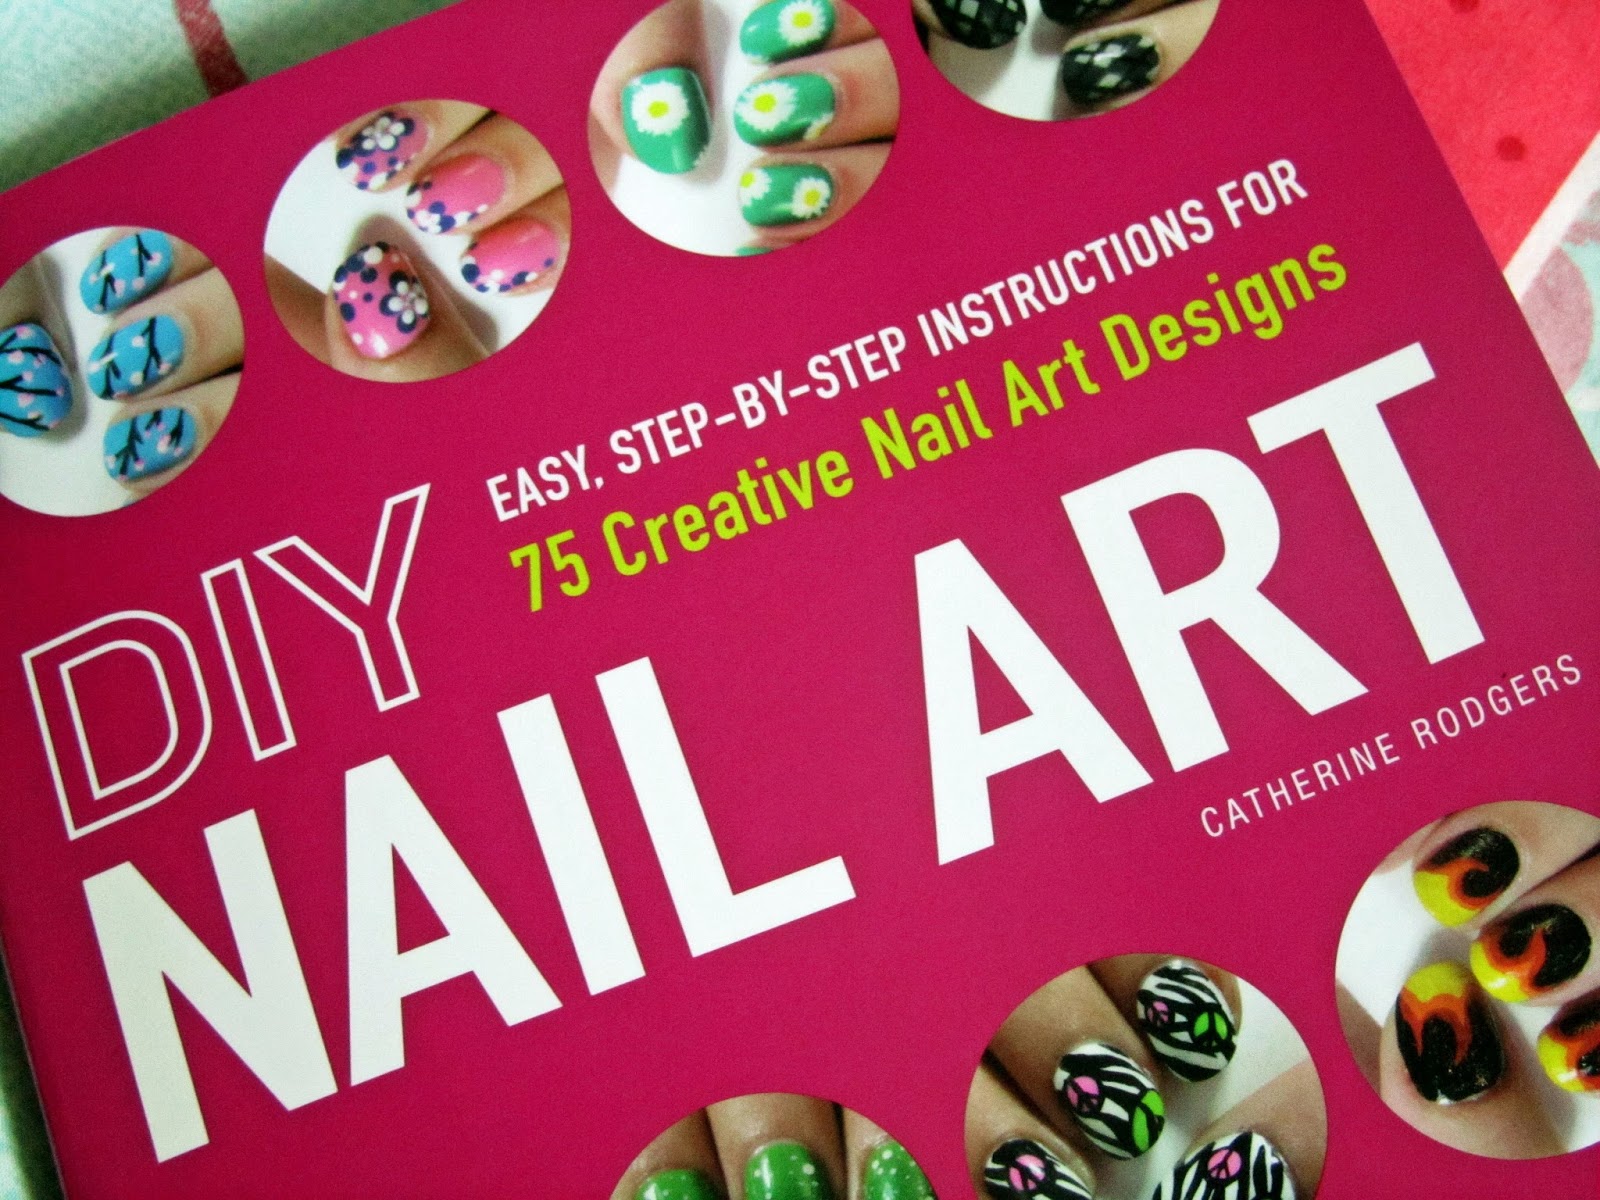 DIY Nail Art Book: I Scream Nails - wide 7